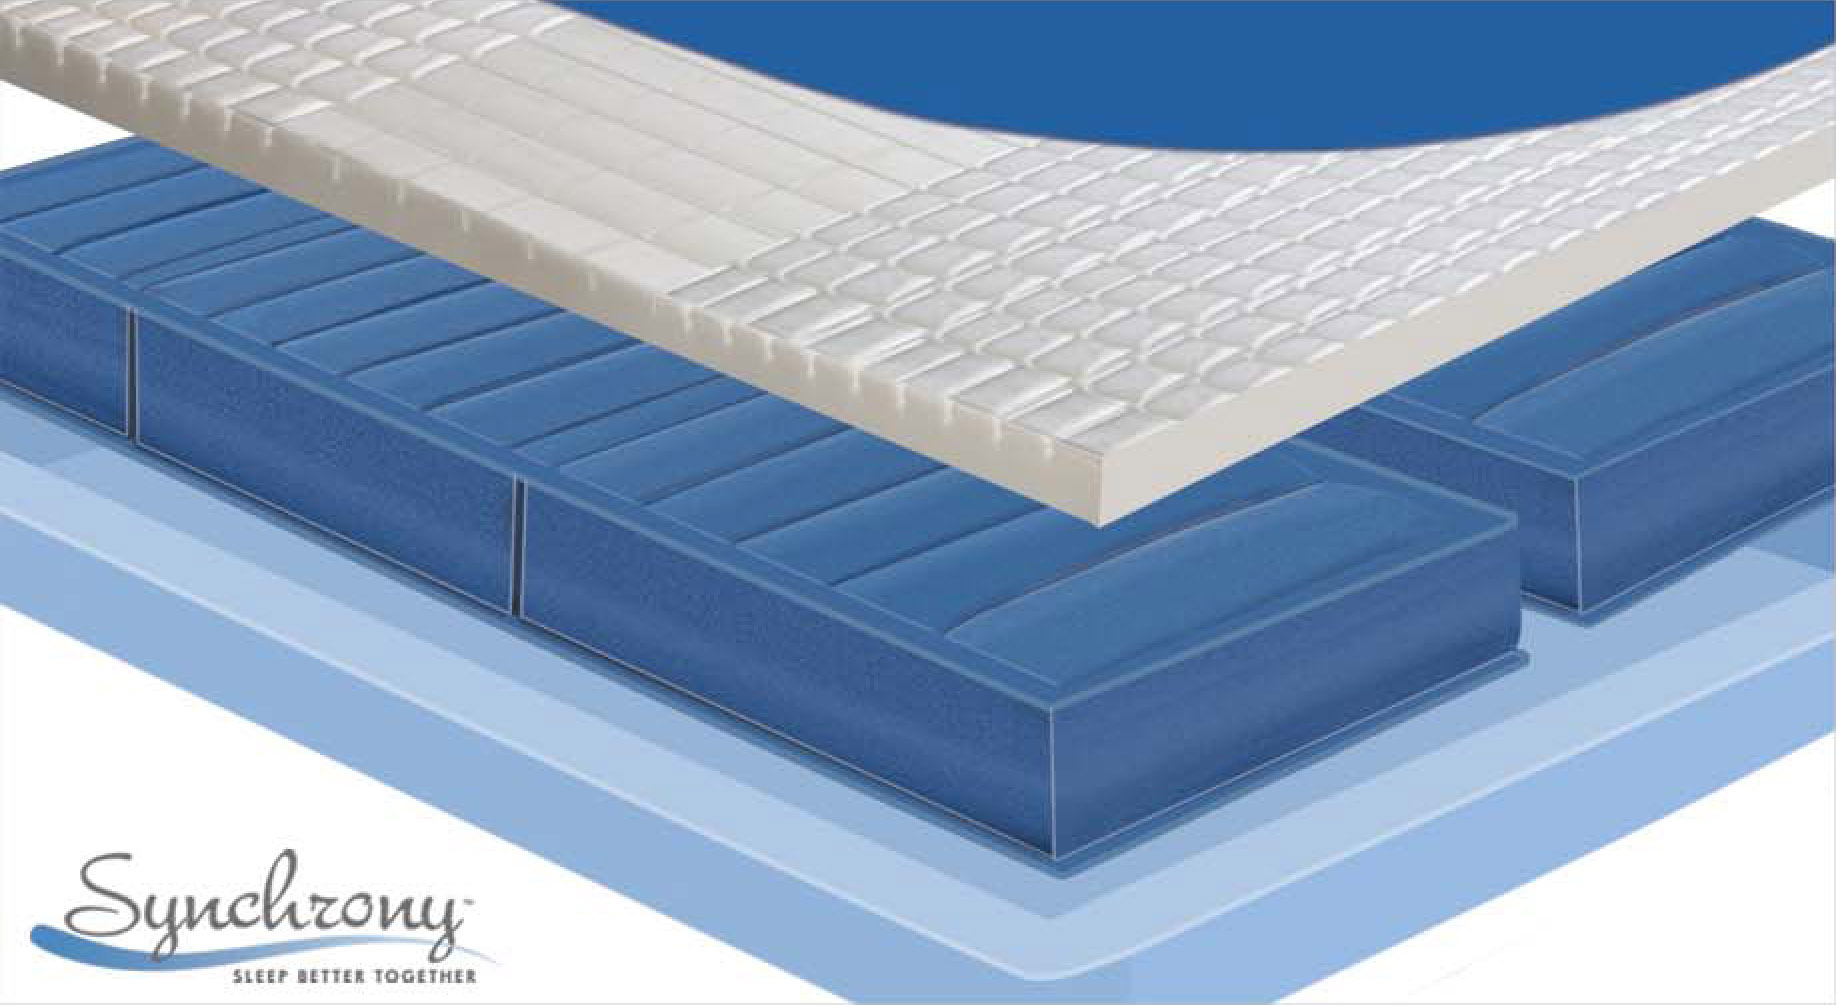 8 air bed multi chamber mattress